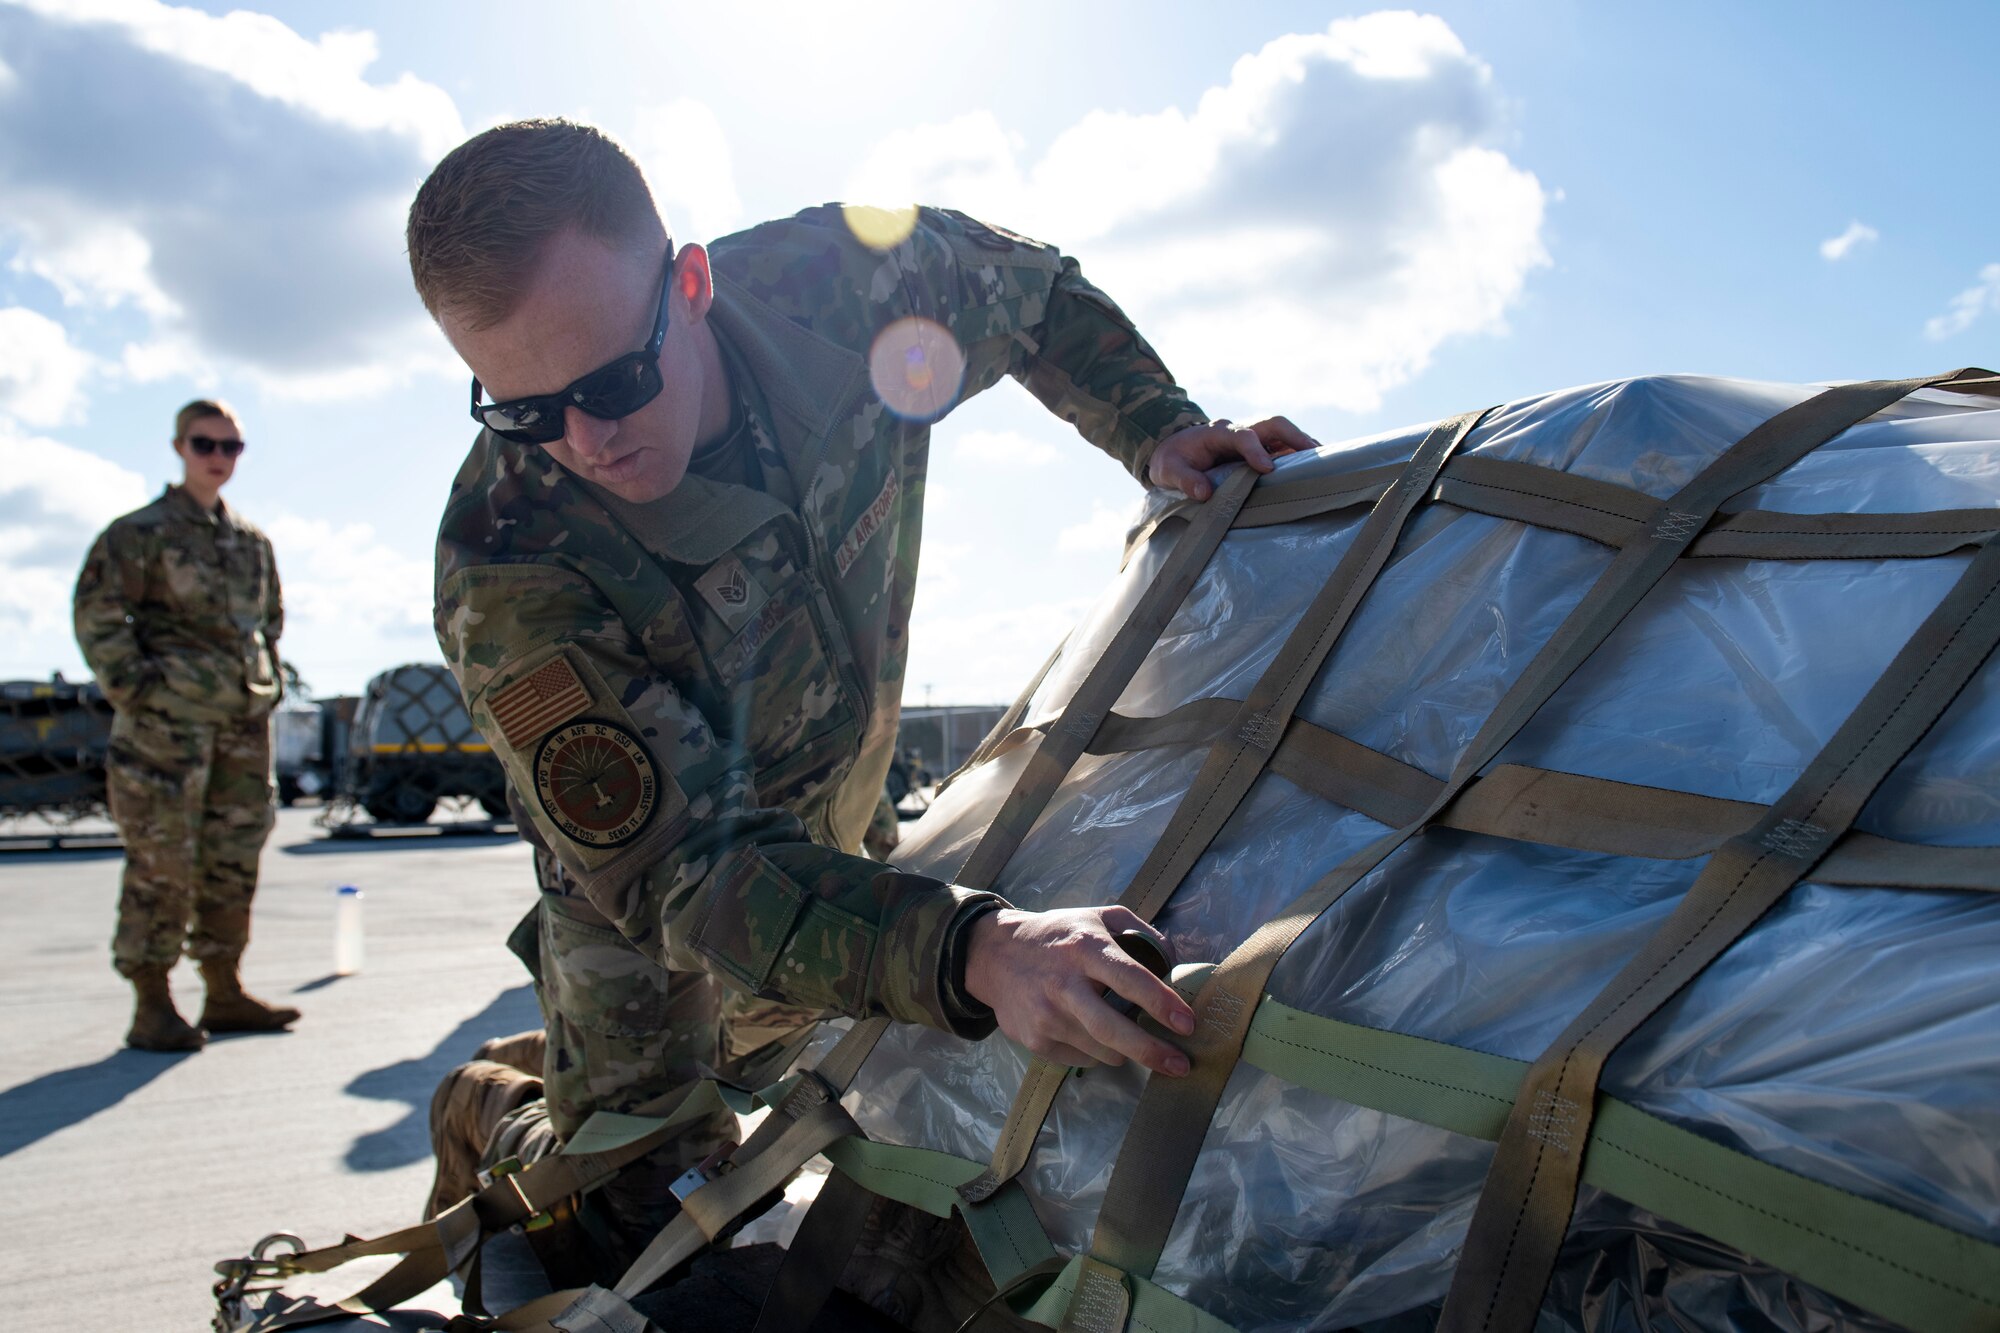 A photo of Airmen palatizing gear for deployment